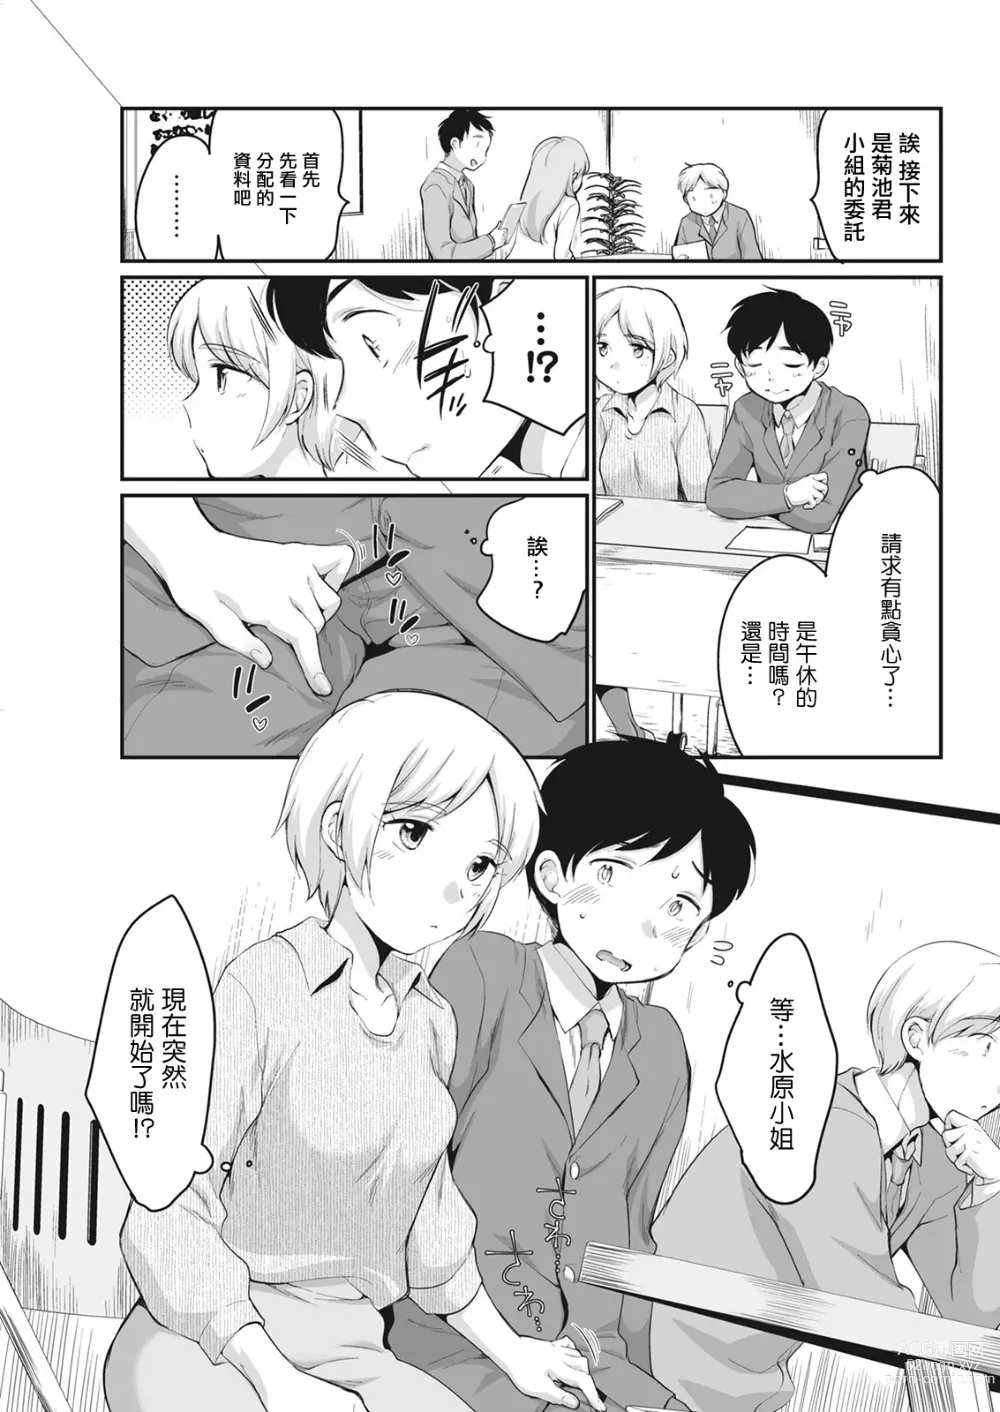 Page 3 of manga 與水原小姐的悄悄話...